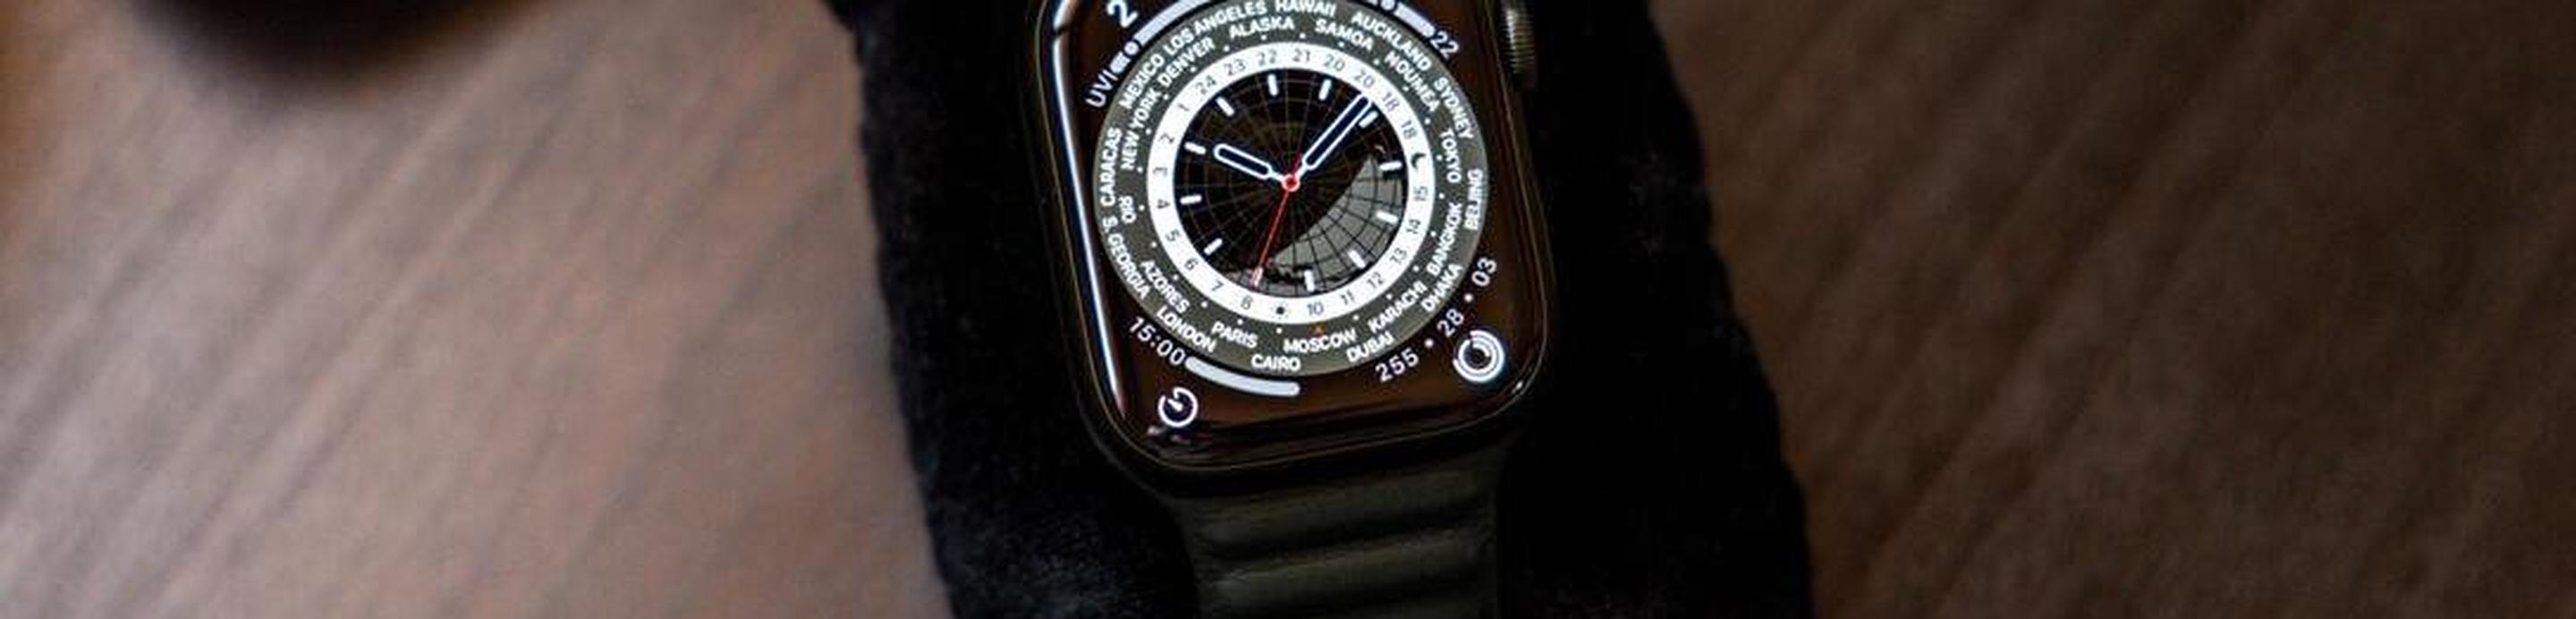 Apple Watch Series 7 Black Friday